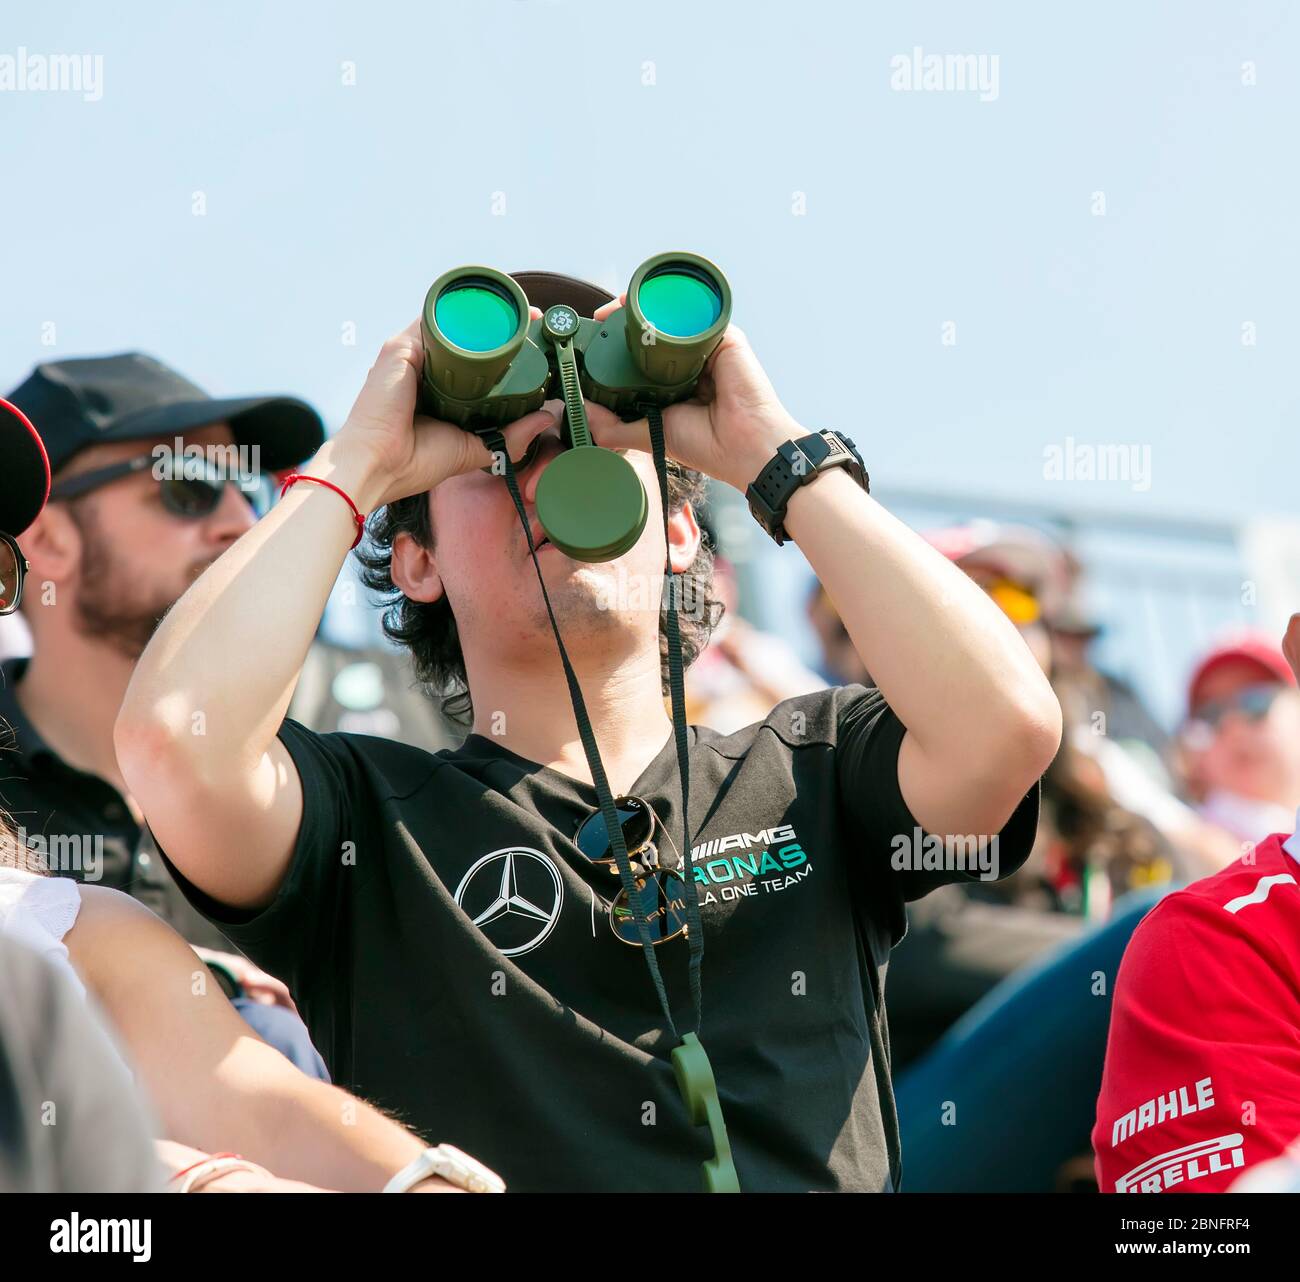 Motor sport spectator with binoculars Stock Photo